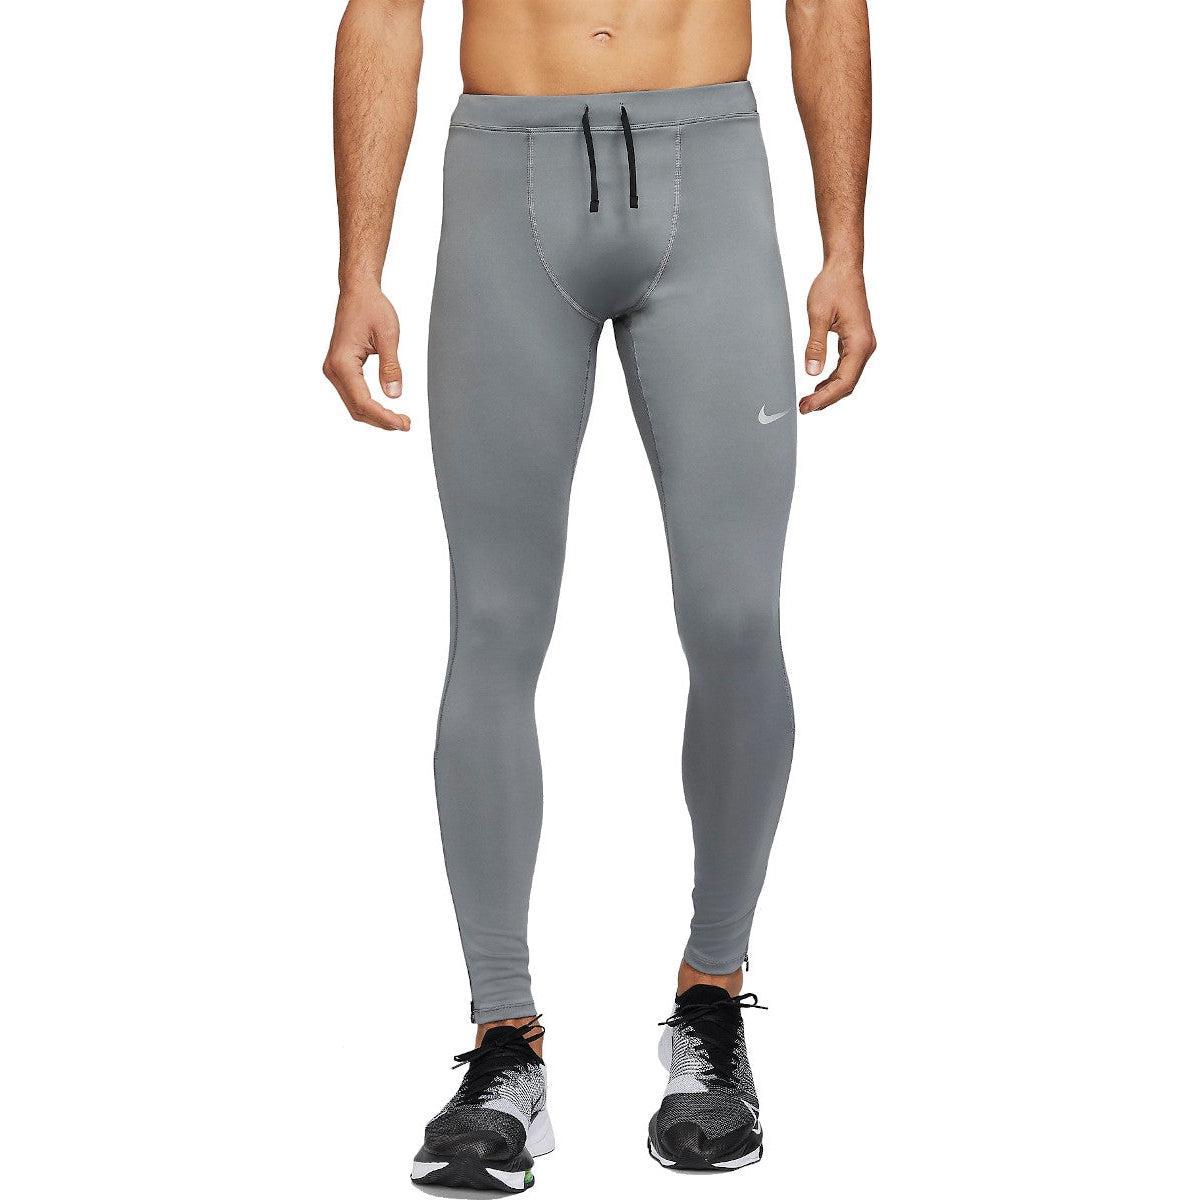 Nike Men's Repel Challenger Tight Running Pants Black Reflective. New.  Men's L